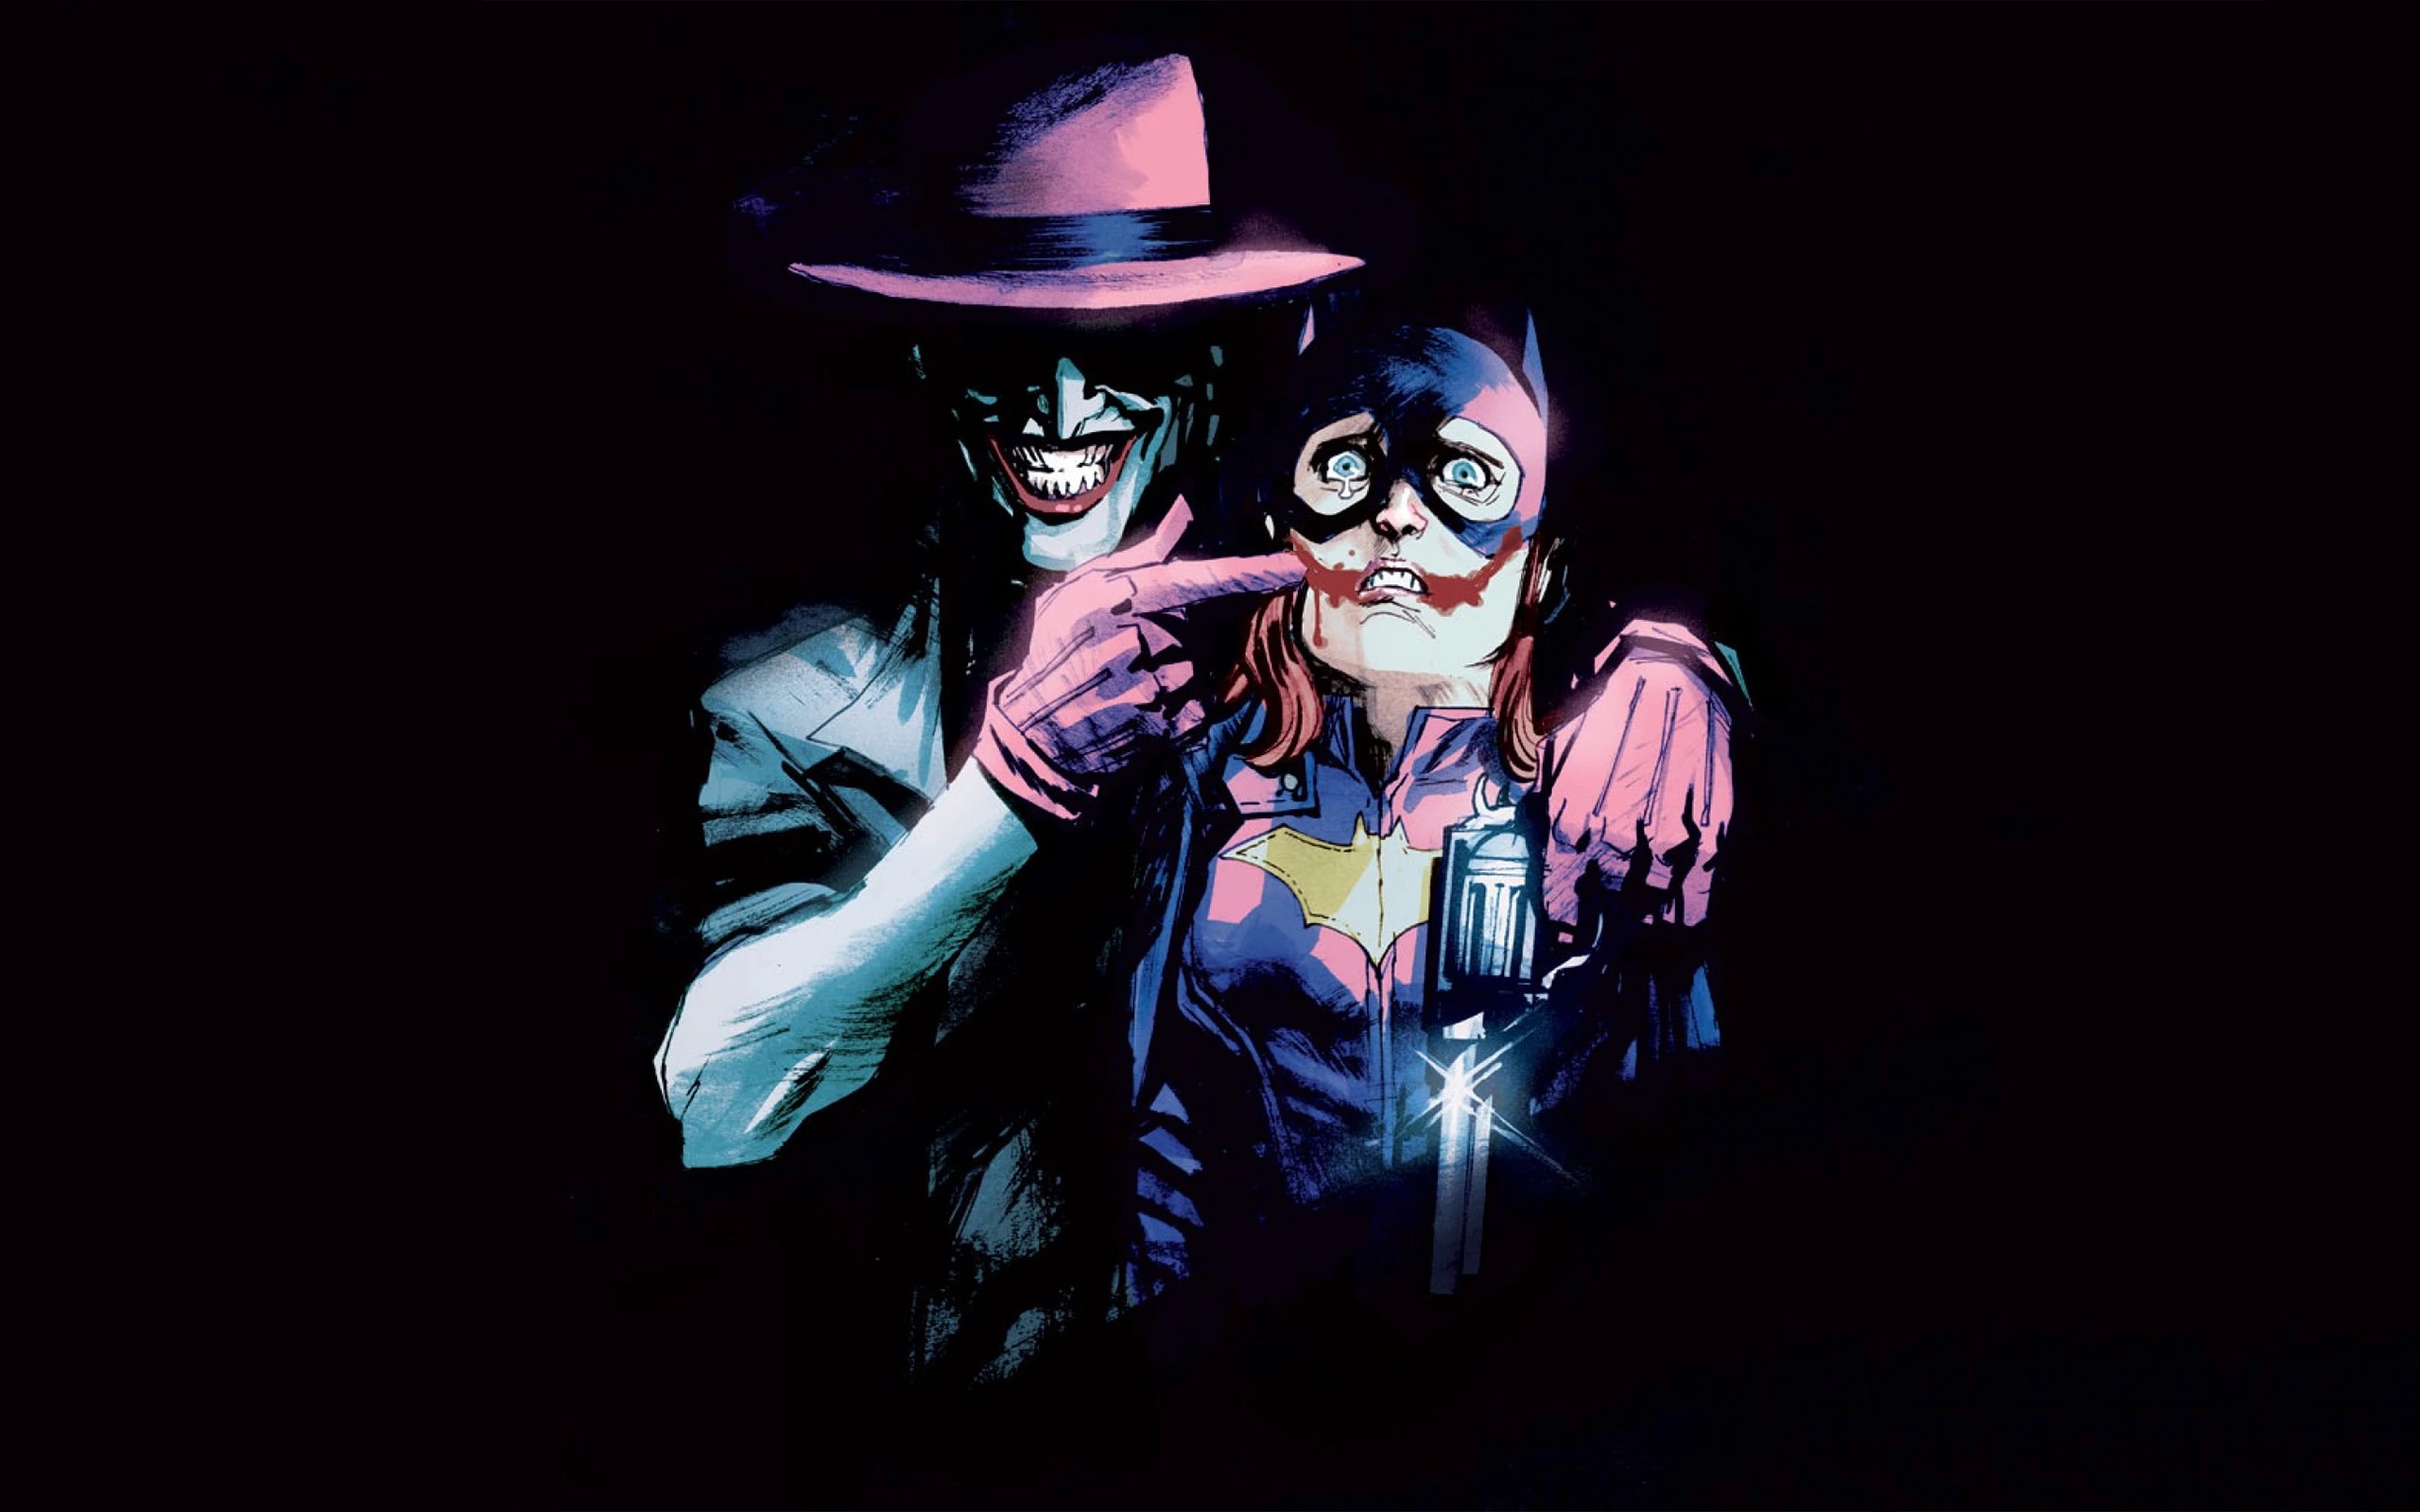 General 2560x1600 Joker DC Comics Batgirl revolver Fear (People) simple background black background hat villains tears mask women weapon Barbara Gordon